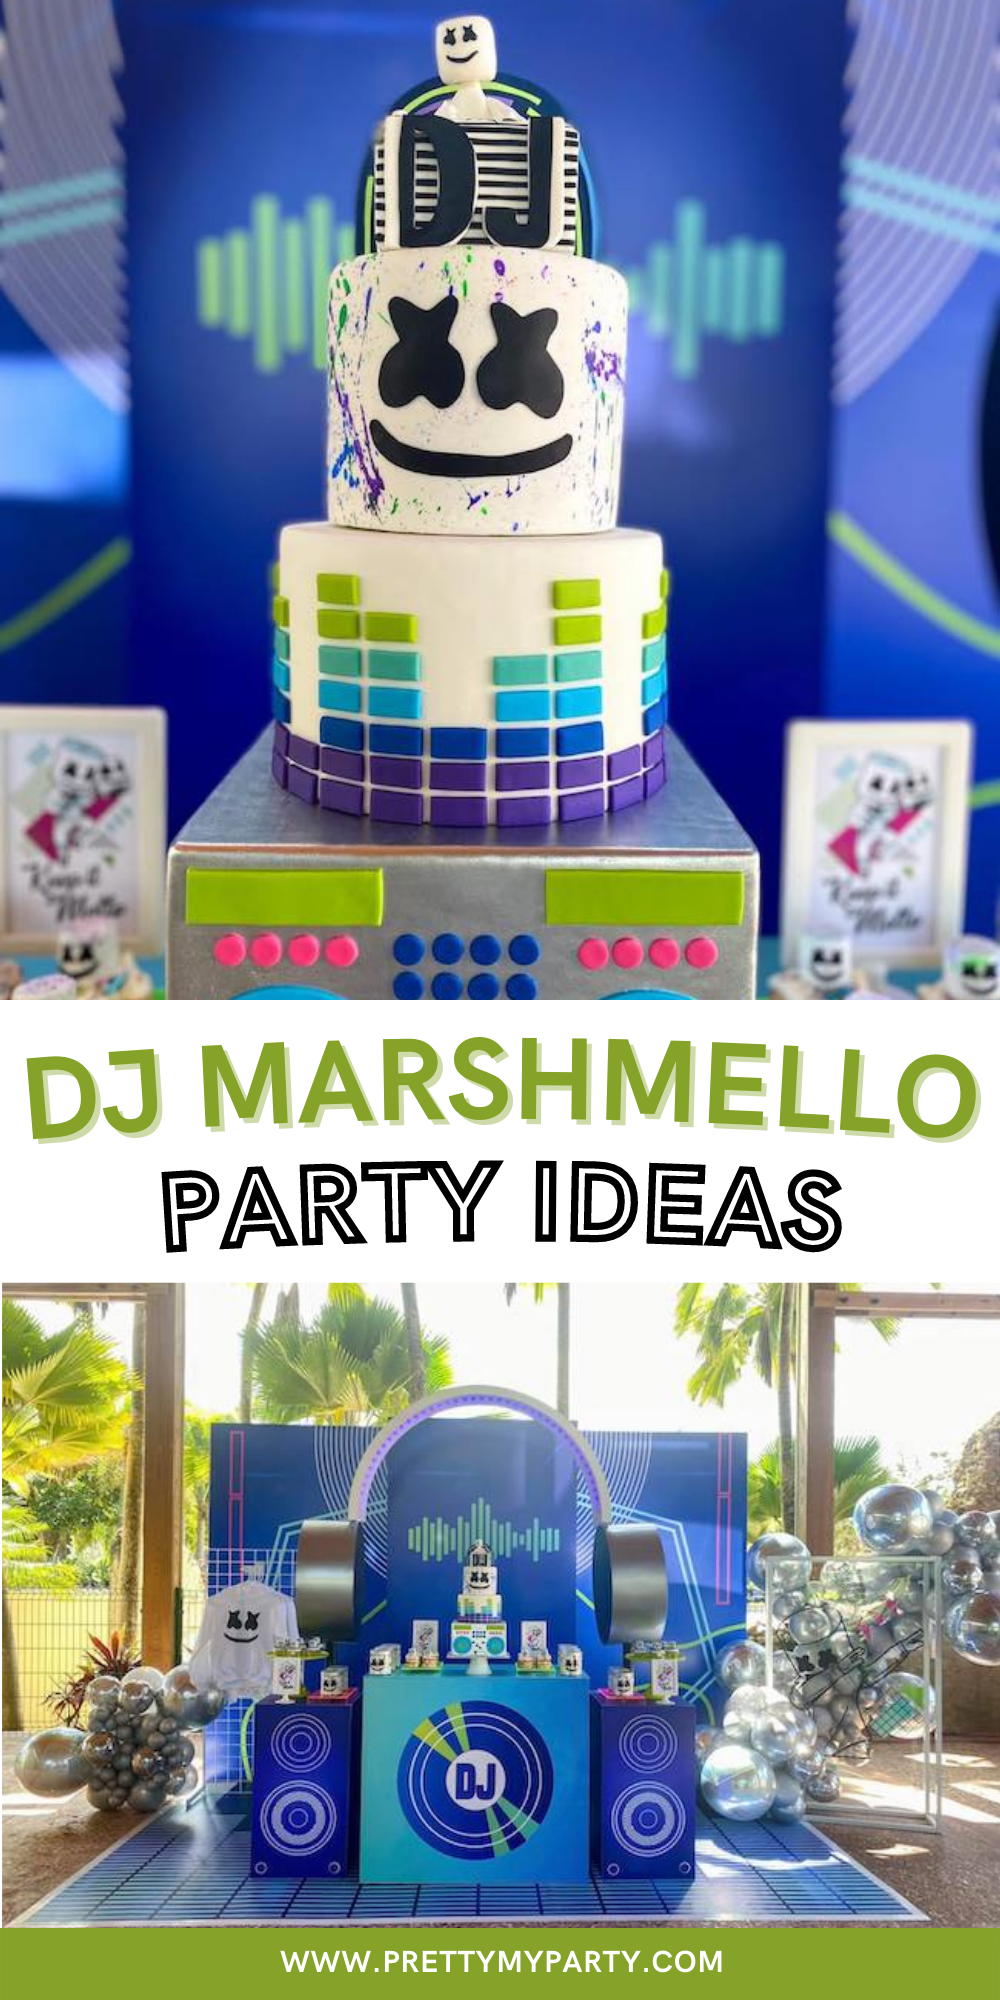 DJ cake | Dj cake, Birthday cakes for men, Happy birthday dj